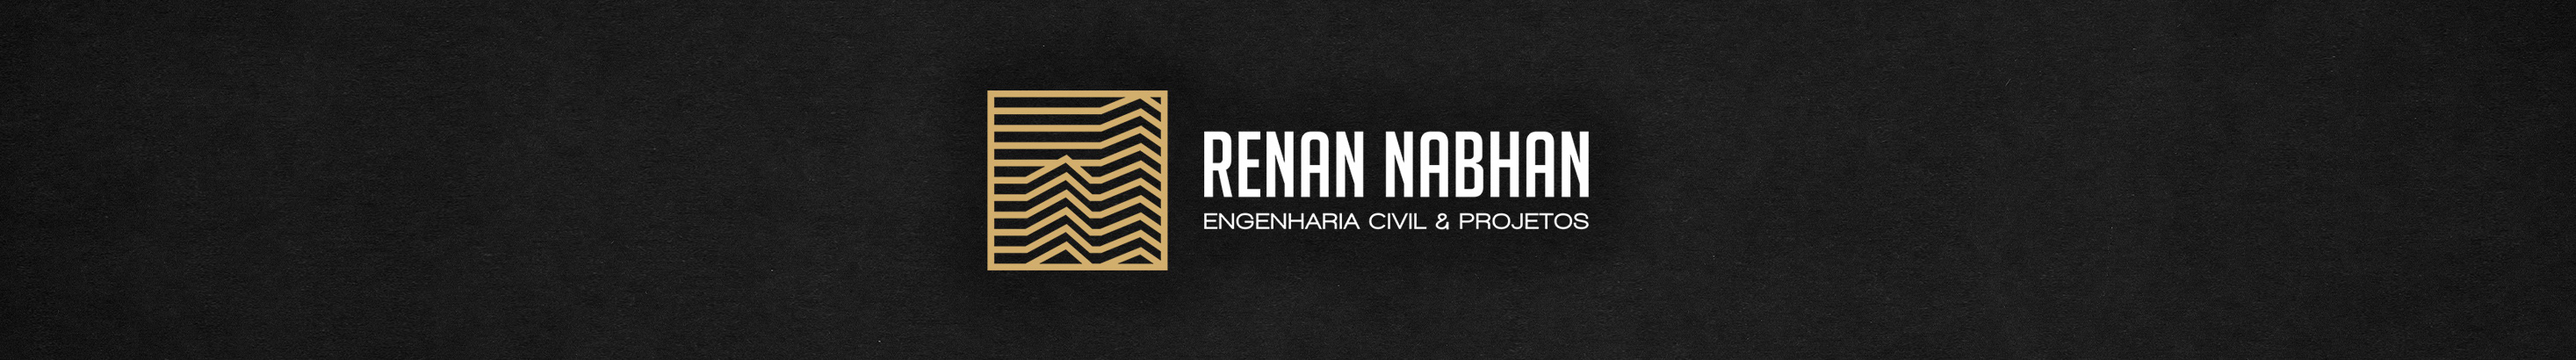 Renan Nabhan's profile banner